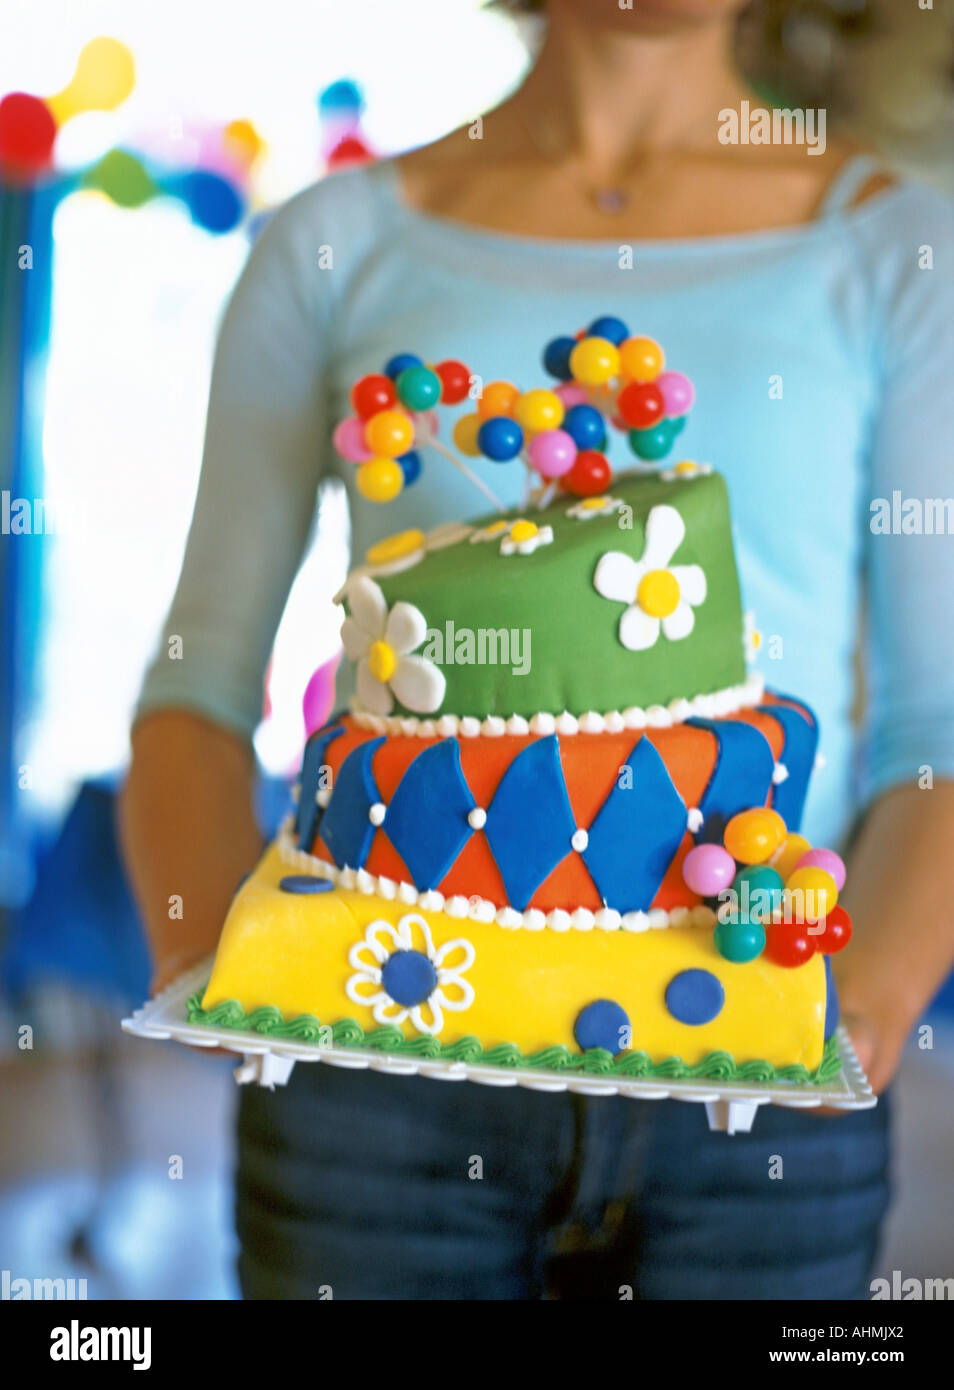 https://c8.alamy.com/comp/AHMJX2/colorful-three-layer-fondant-cake-made-for-a-baby-shower-AHMJX2.jpg